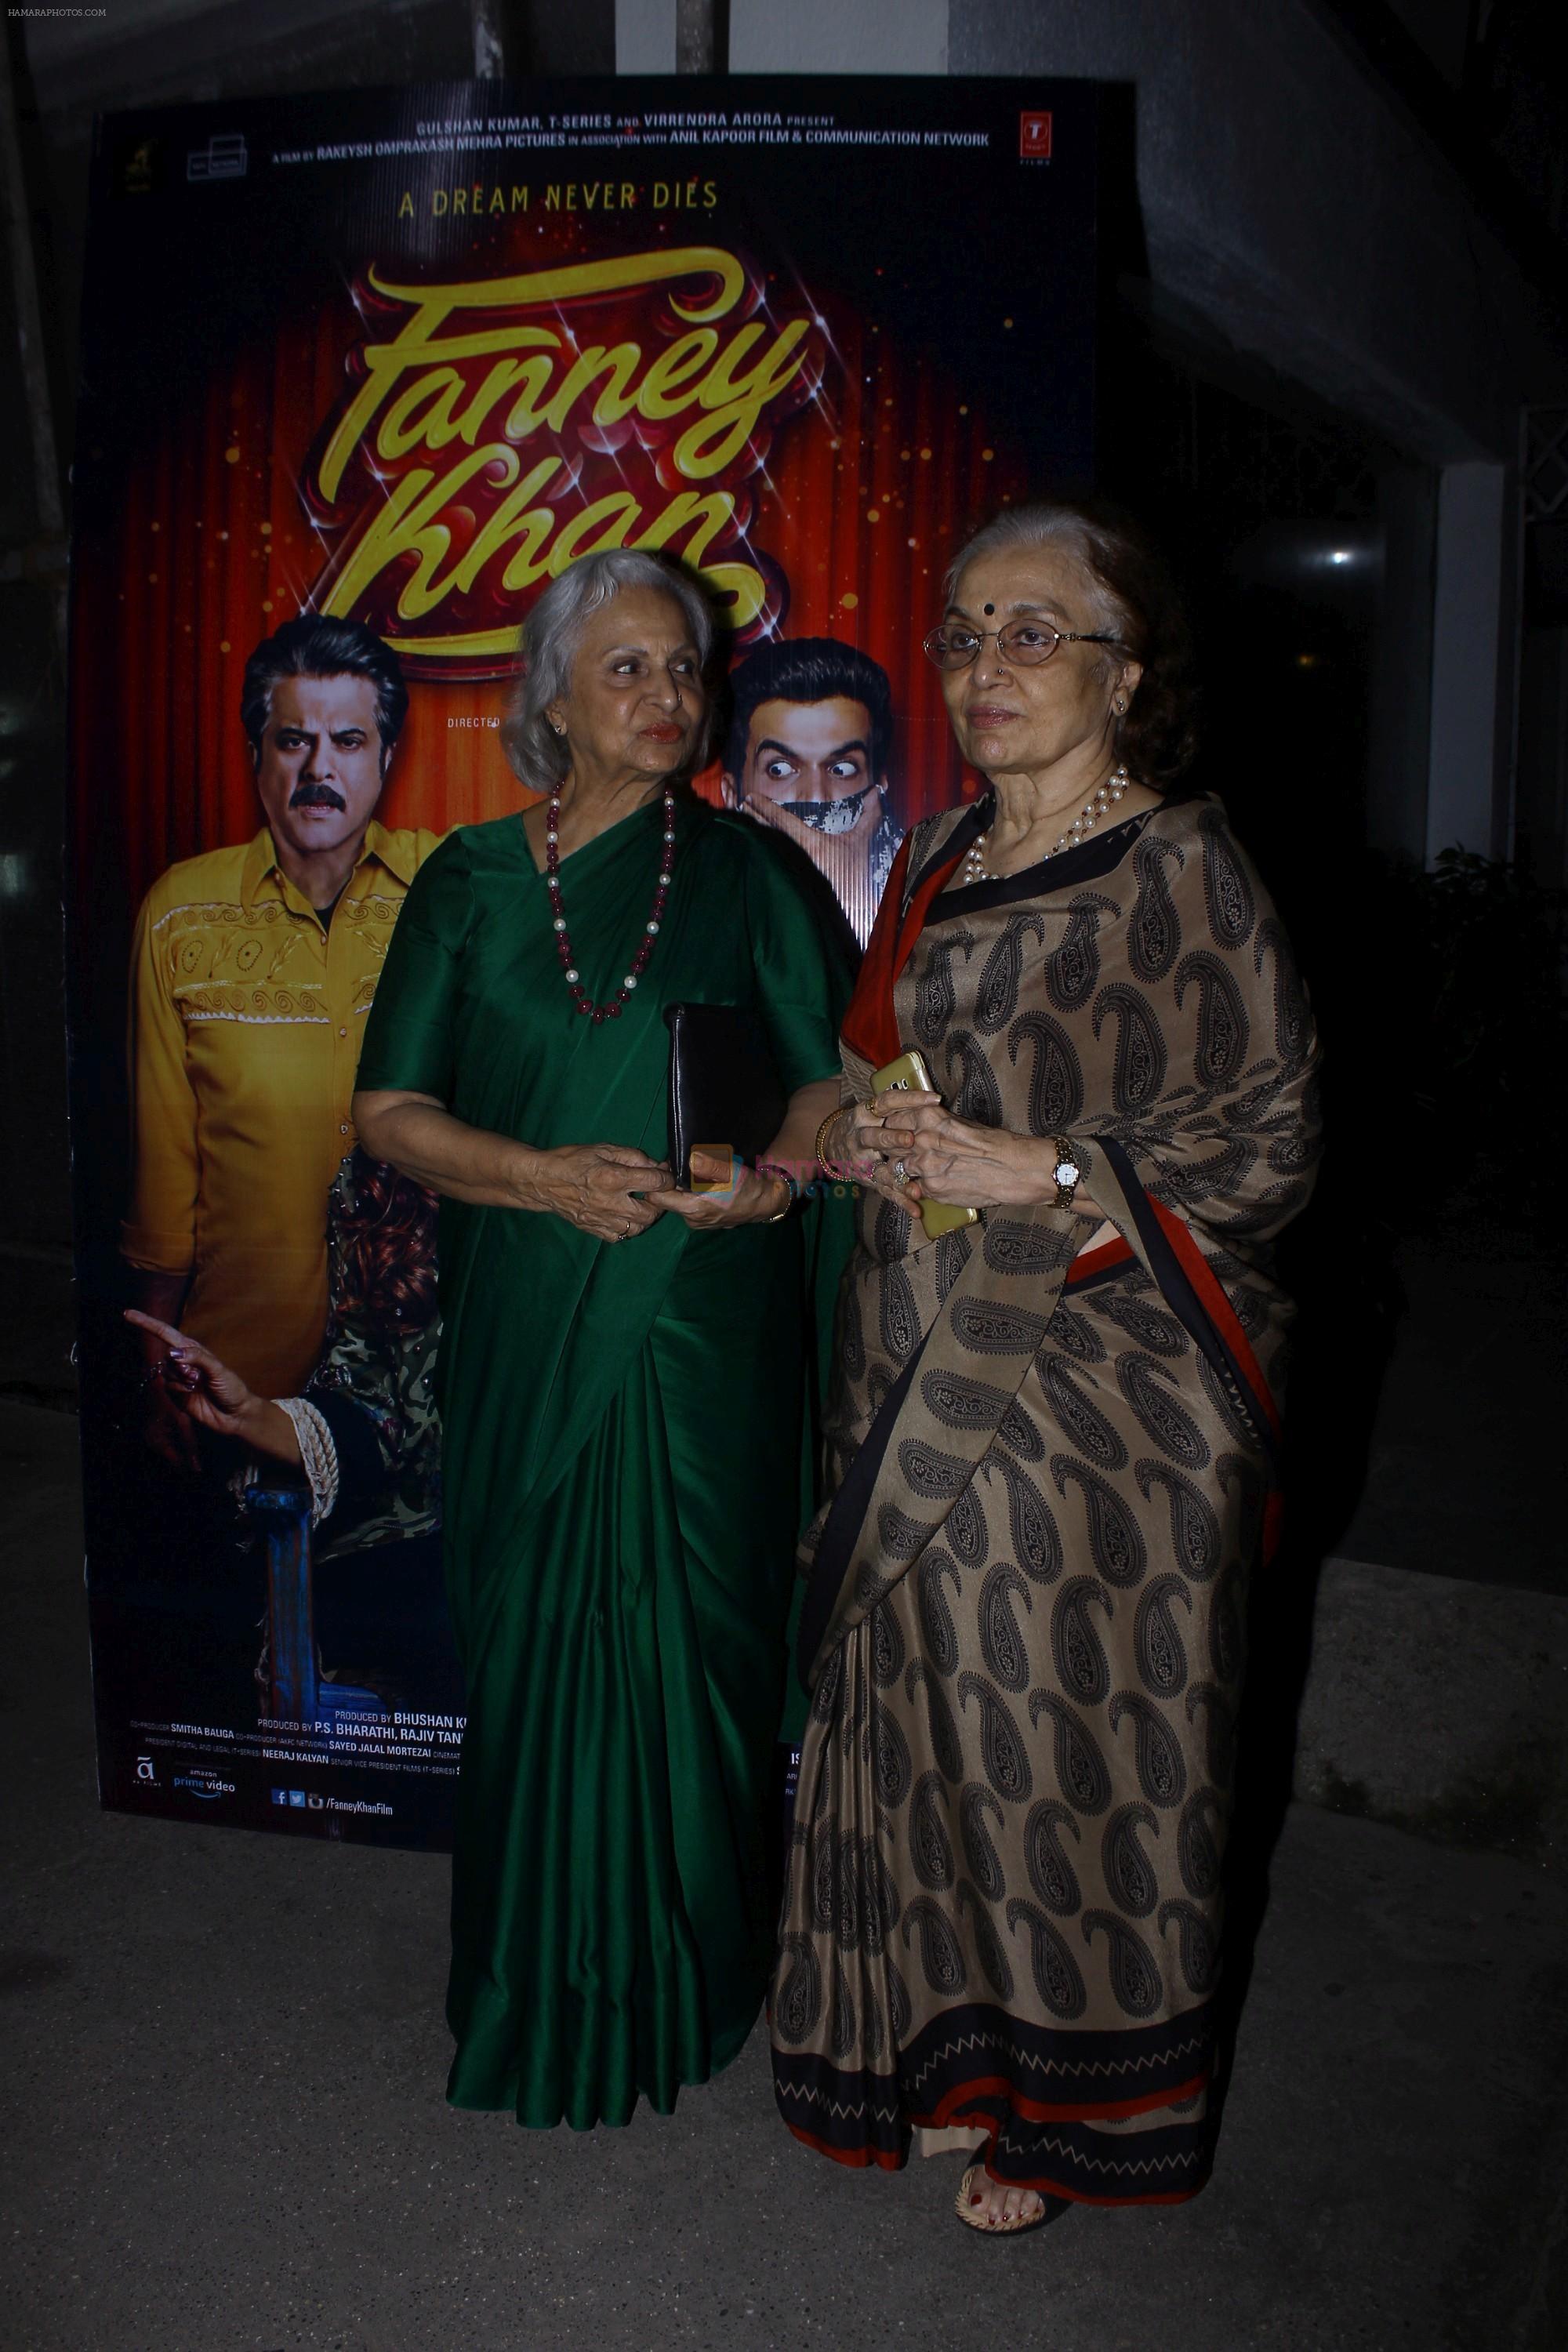 Asha Parekh, Waheeda Rehman at the screening of film Fanney Khan on 1st Aug 2018